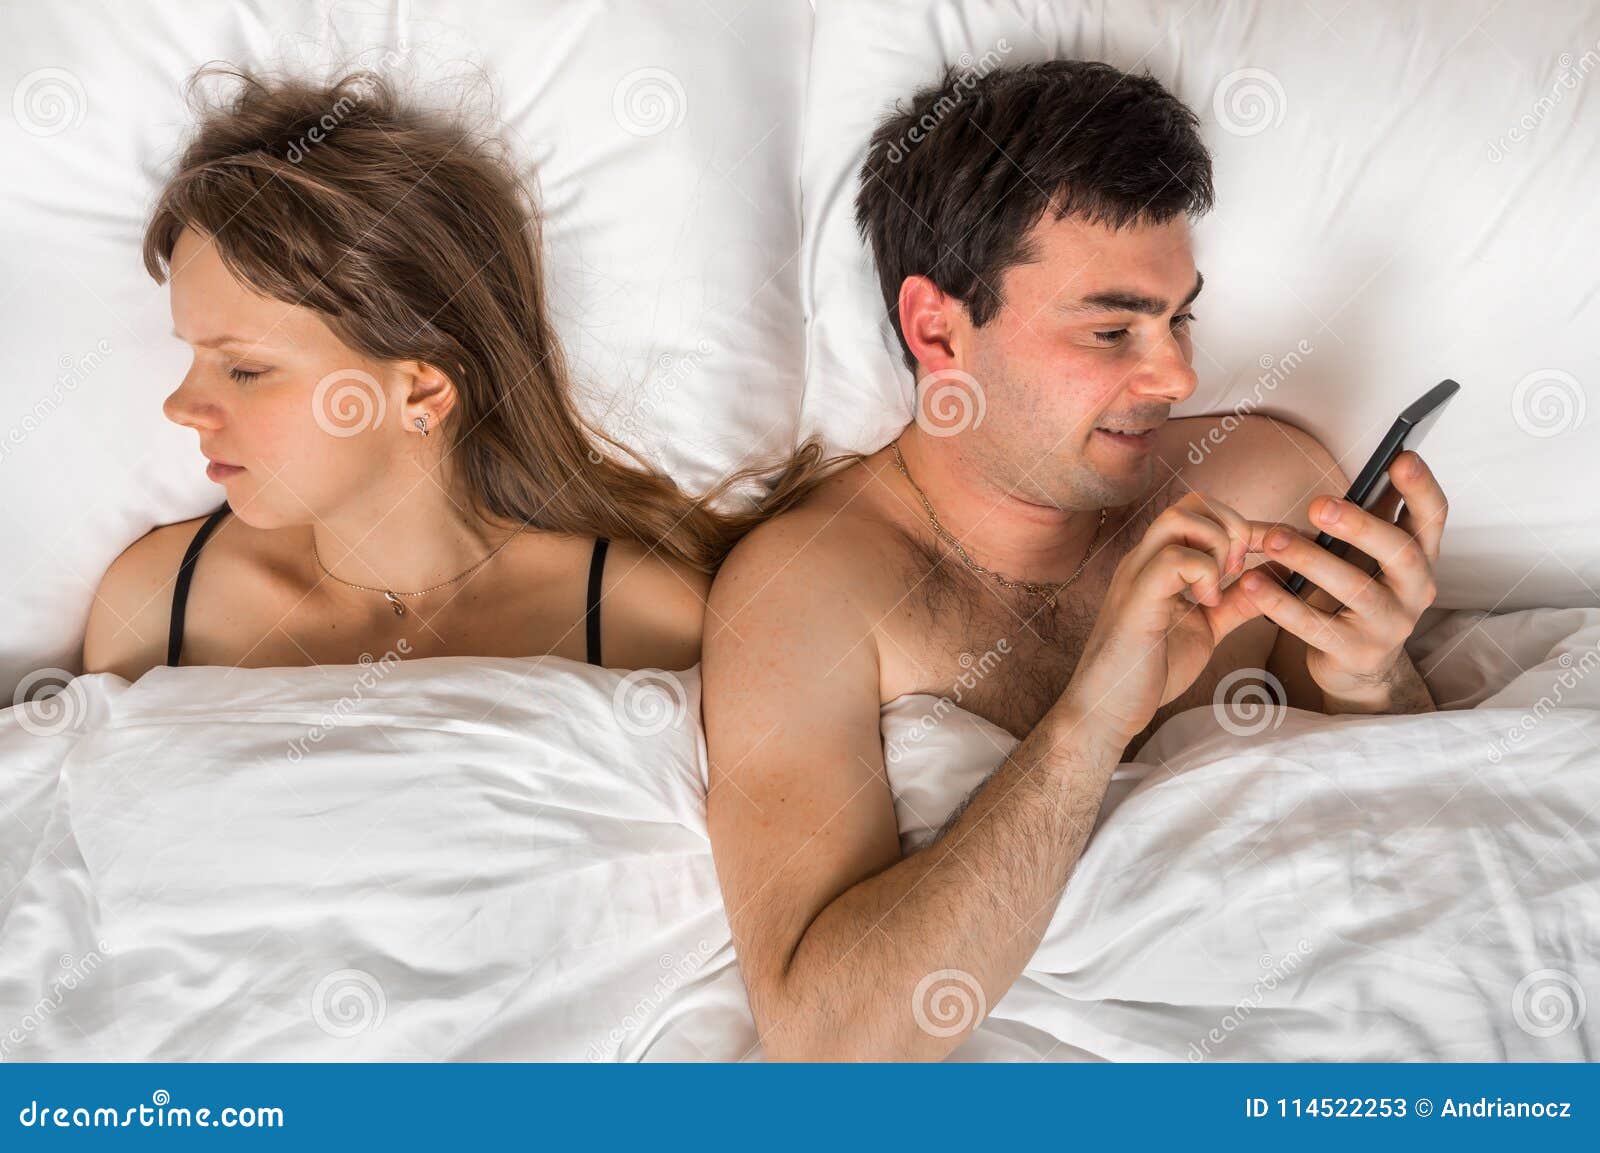 husband and wife before sleepnight